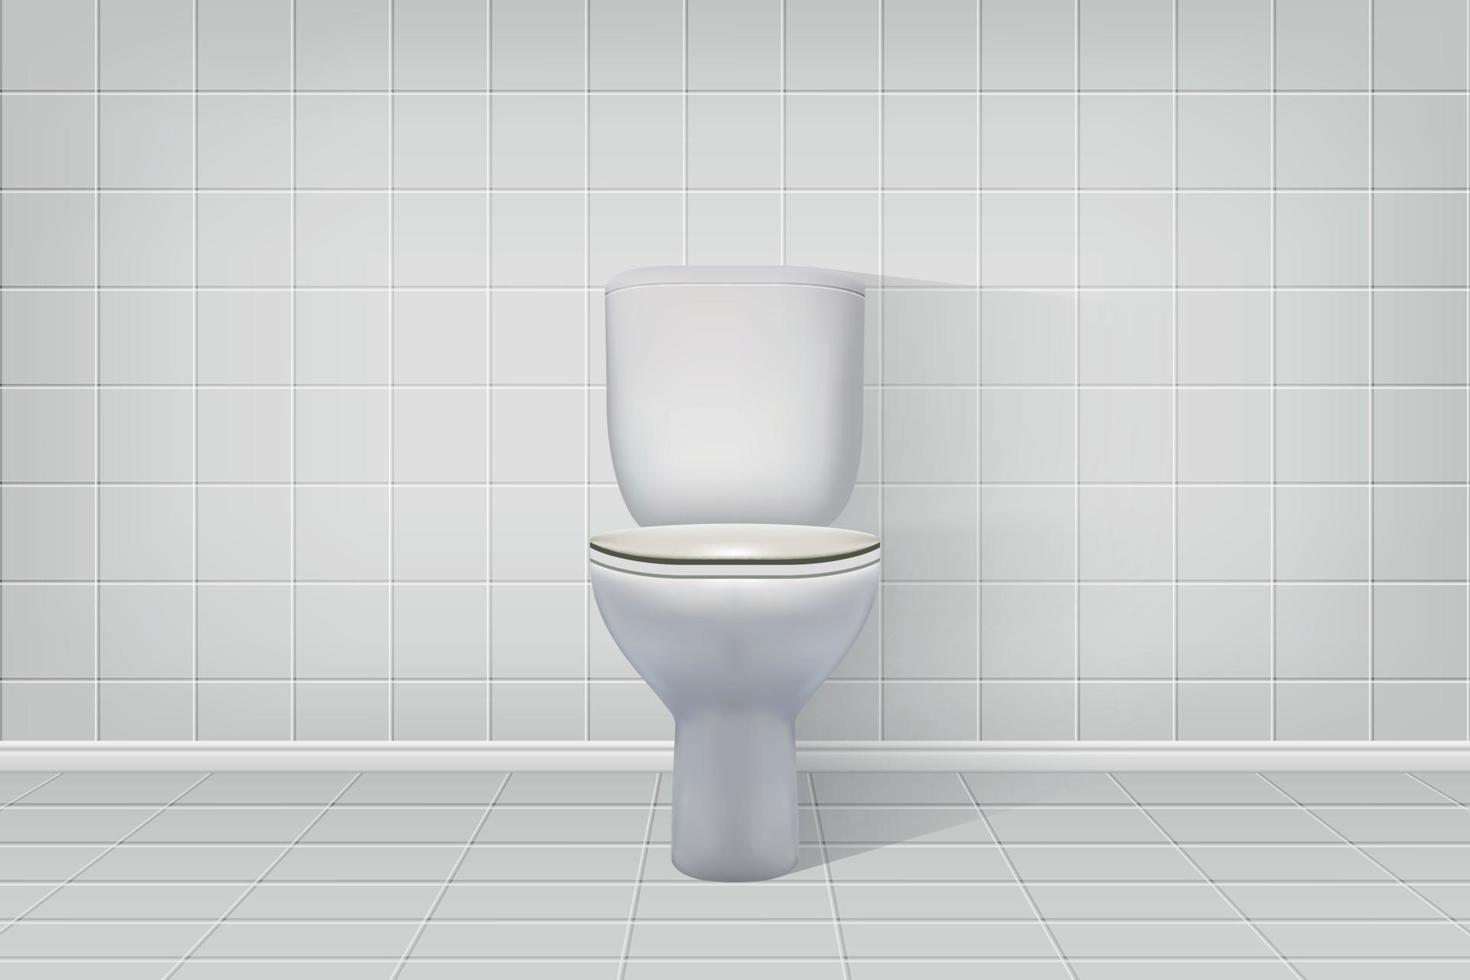 realistische toilet interieur achtergrond. vector